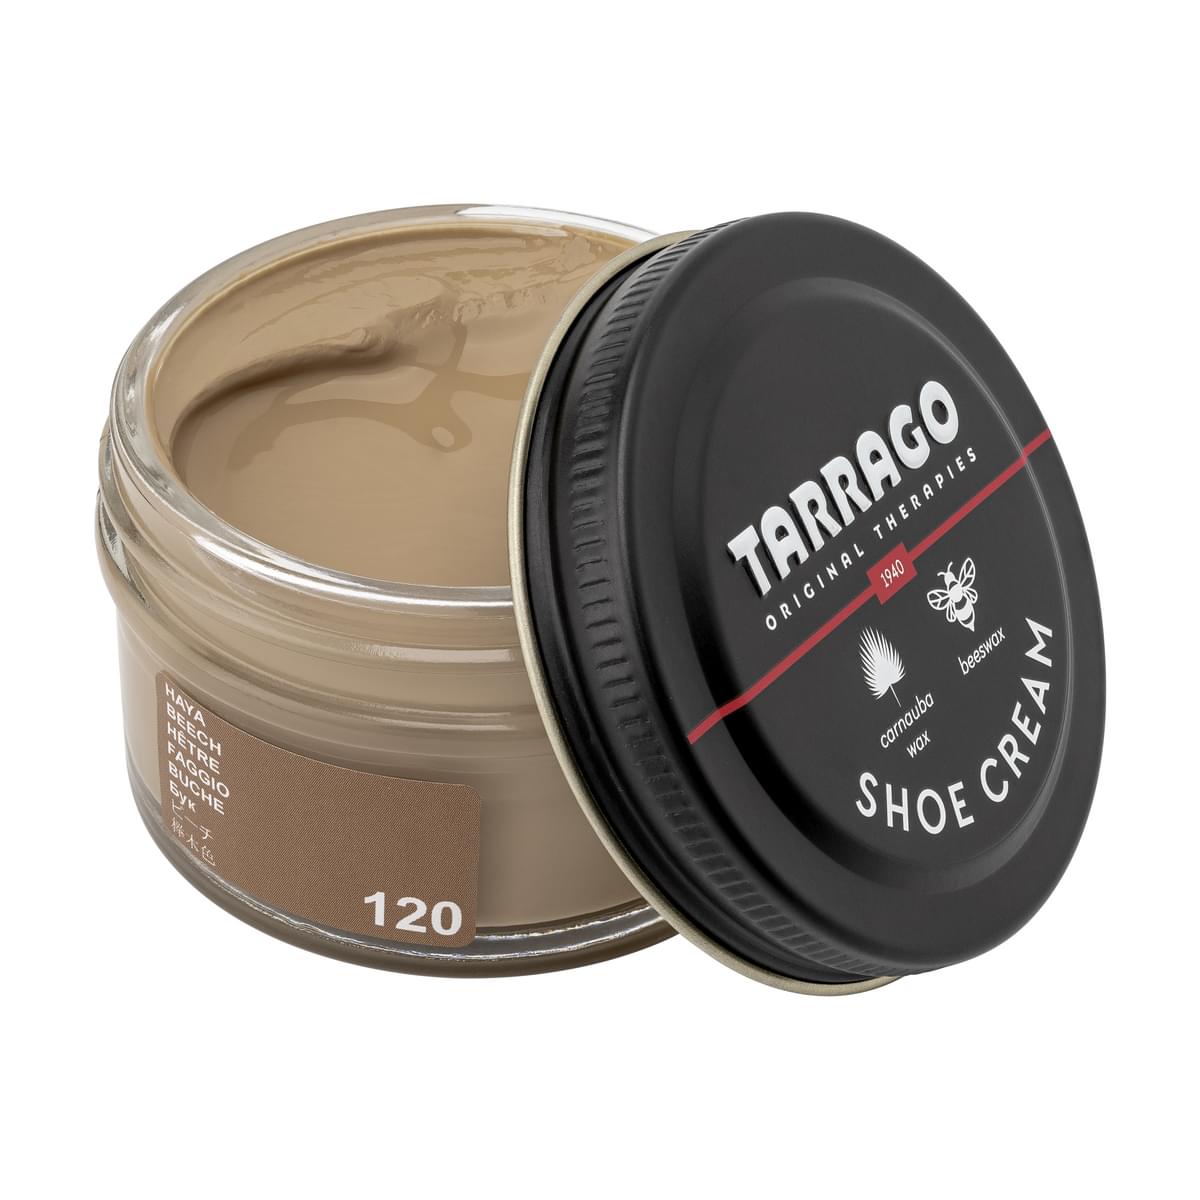 Tarrago Shoe Cream  - Beech - 120